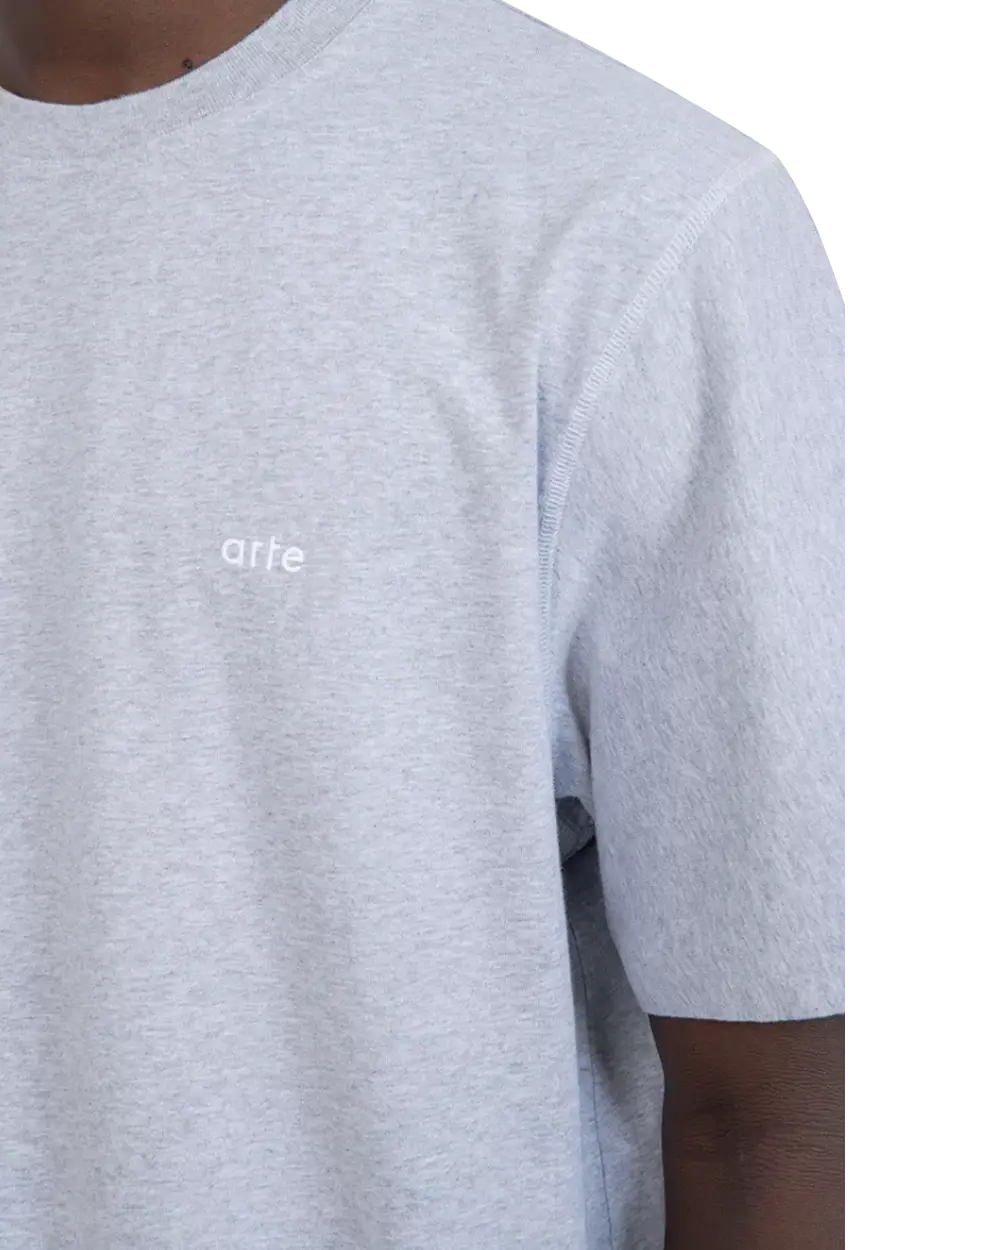 Teo Back Runner T-Shirt Grey